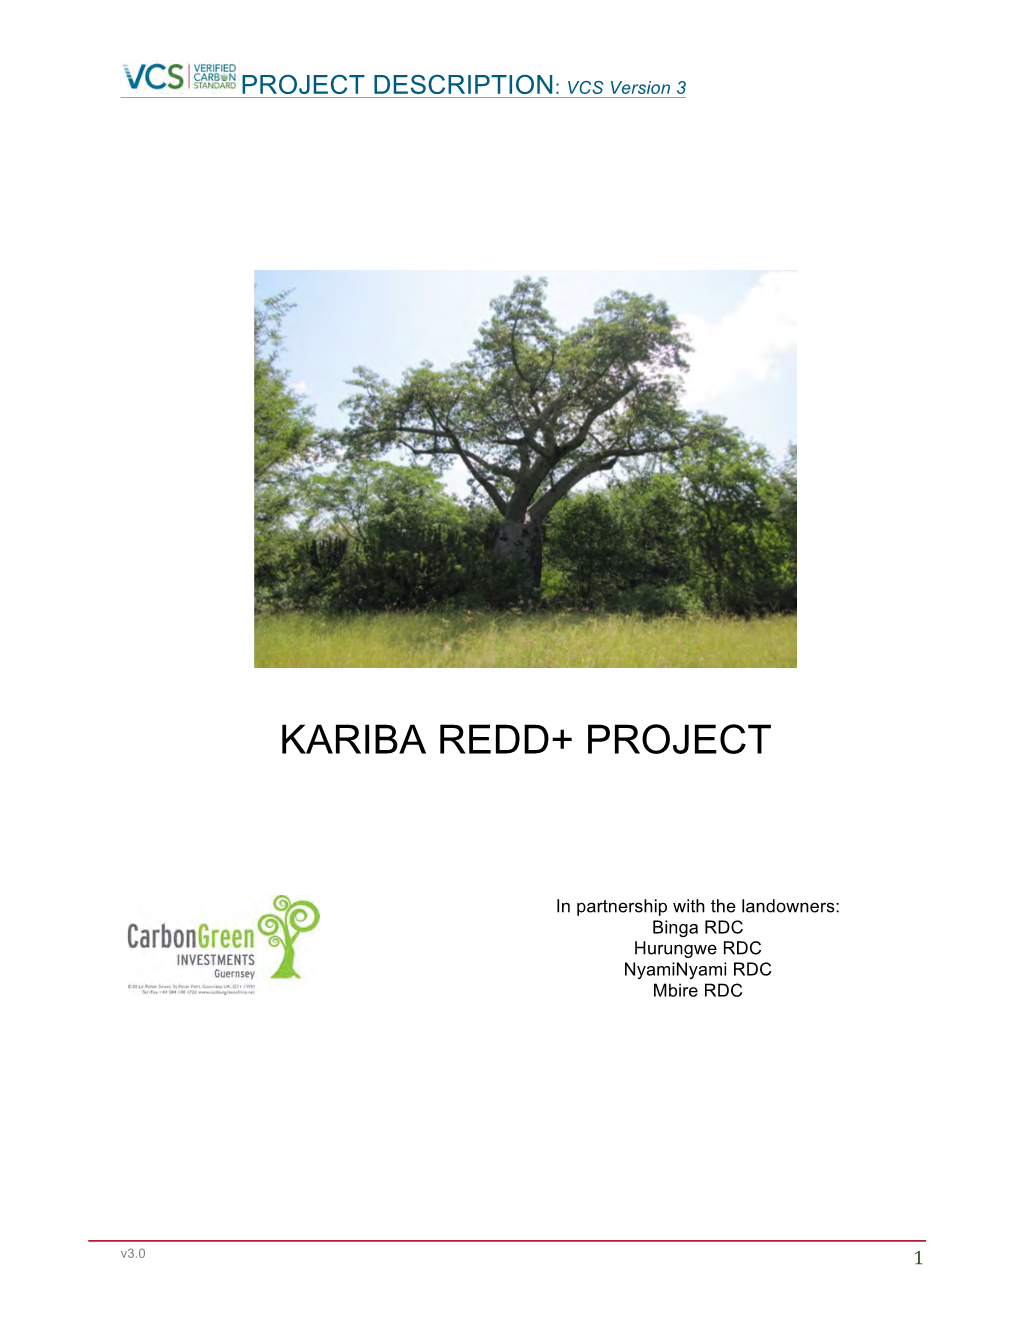 Kariba Redd+ Project